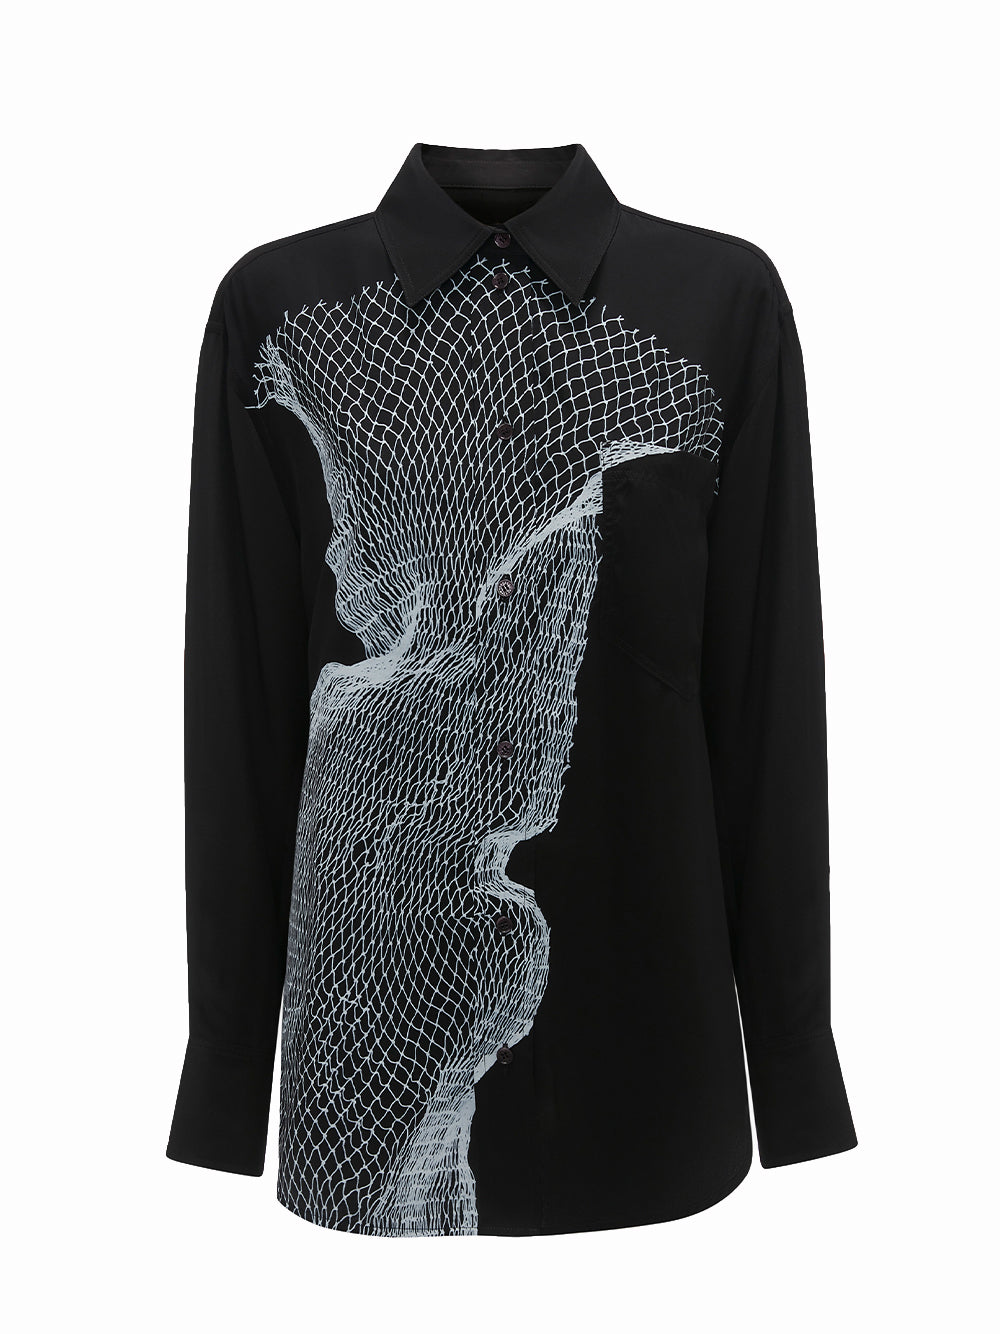 Long Sleeve Pajama Shirt Contorted Net (Black/White)